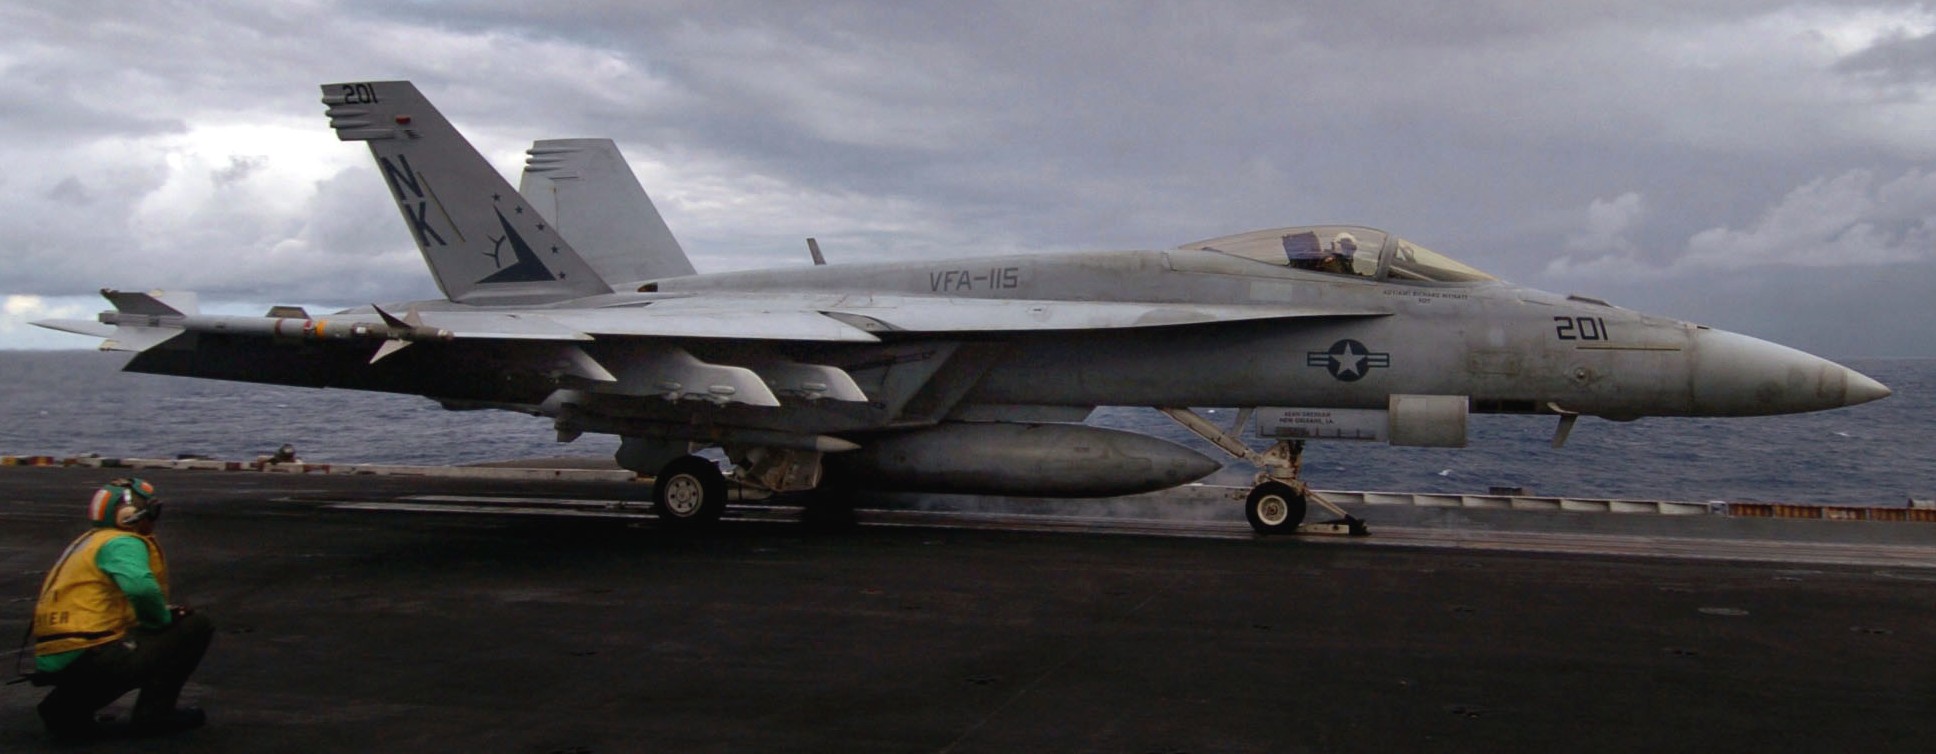 vfa-115 eagles strike fighter squadron f/a-18e super hornet cvw-14 uss john c. stennis cvn-74 2004 52